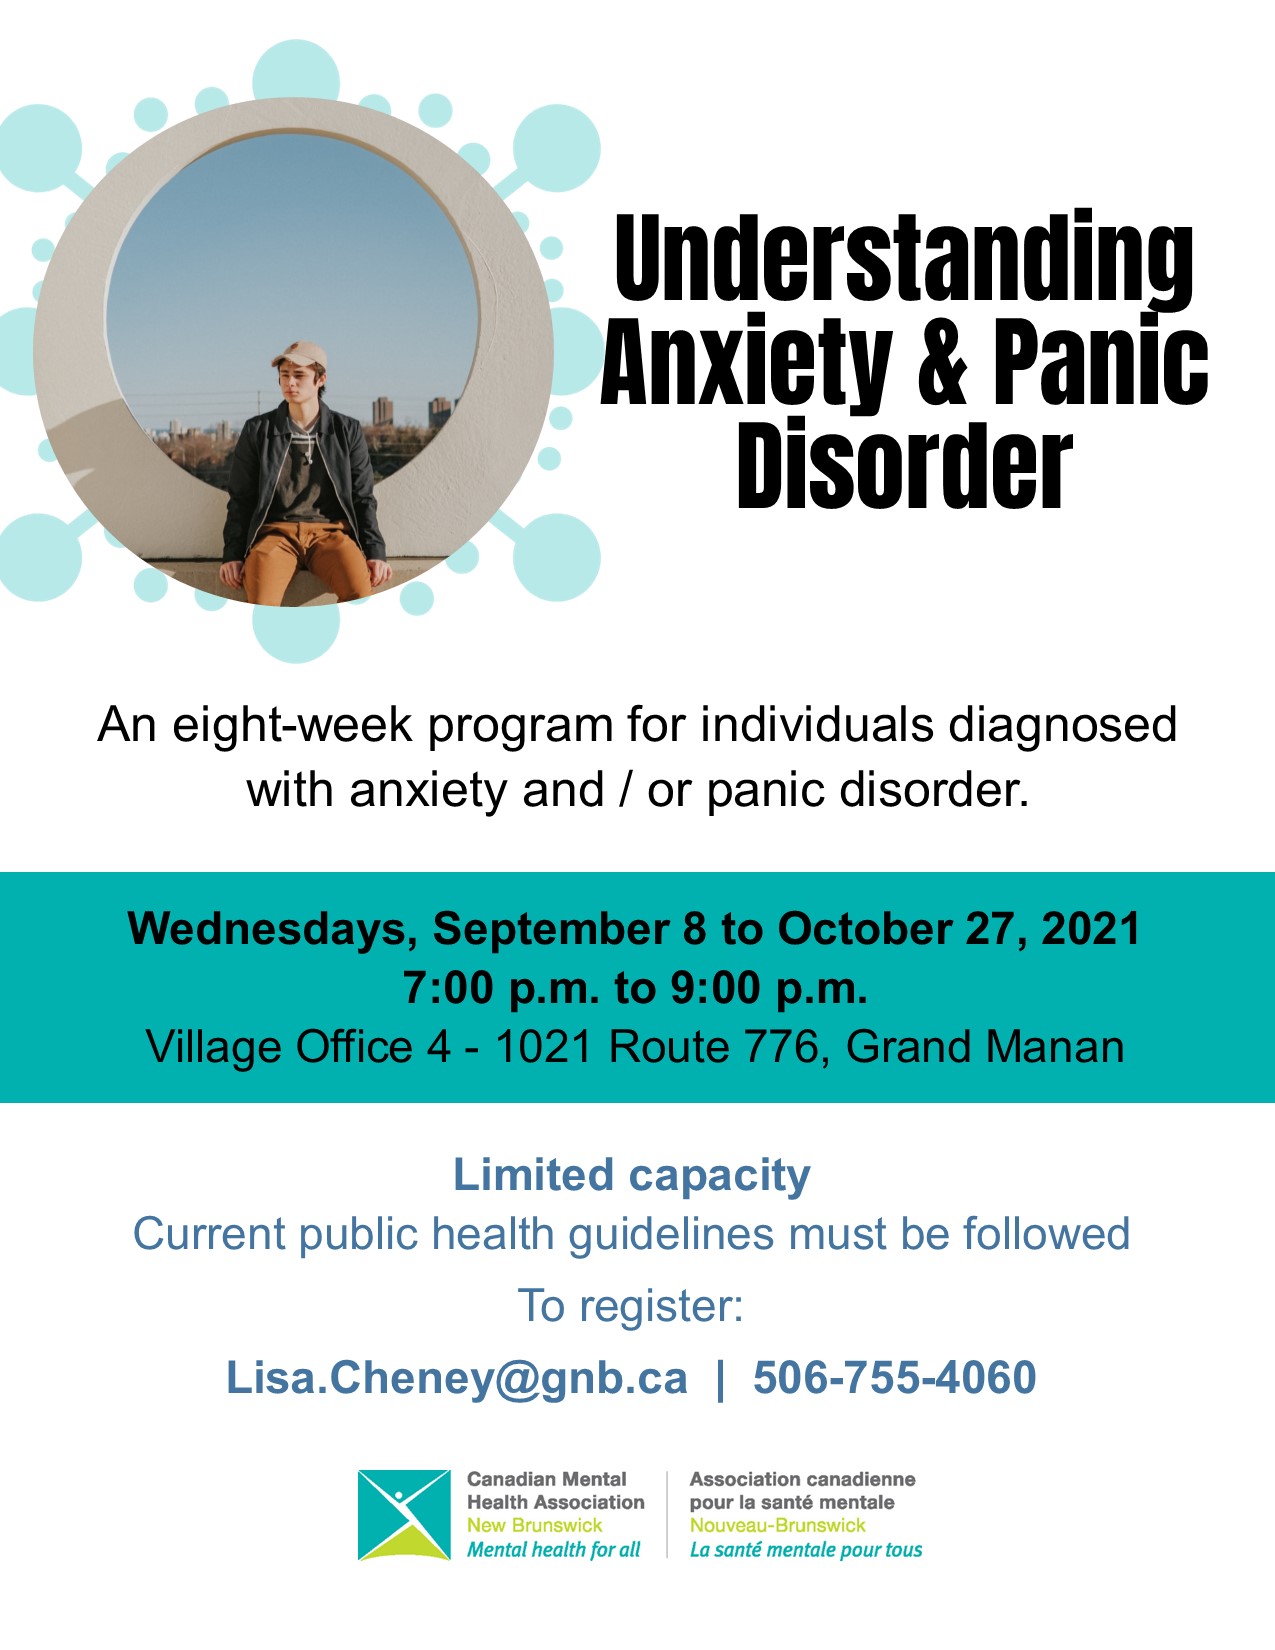 Understanding Anxiety & Panic Disorder (Grand Manan)